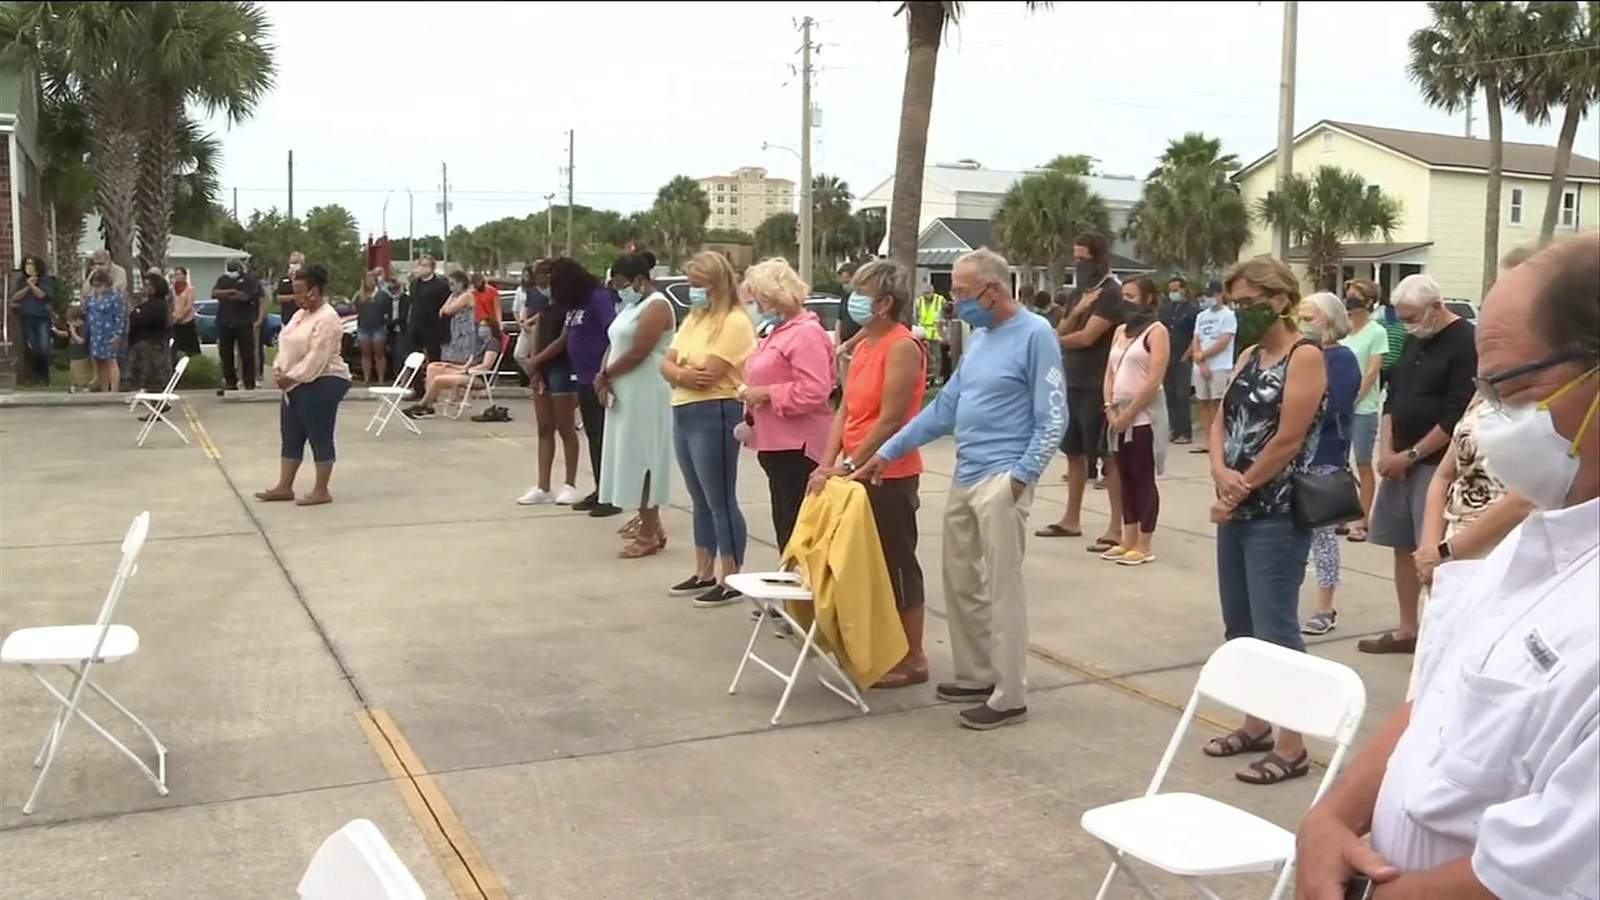 Prayer vigil brings beaches community together